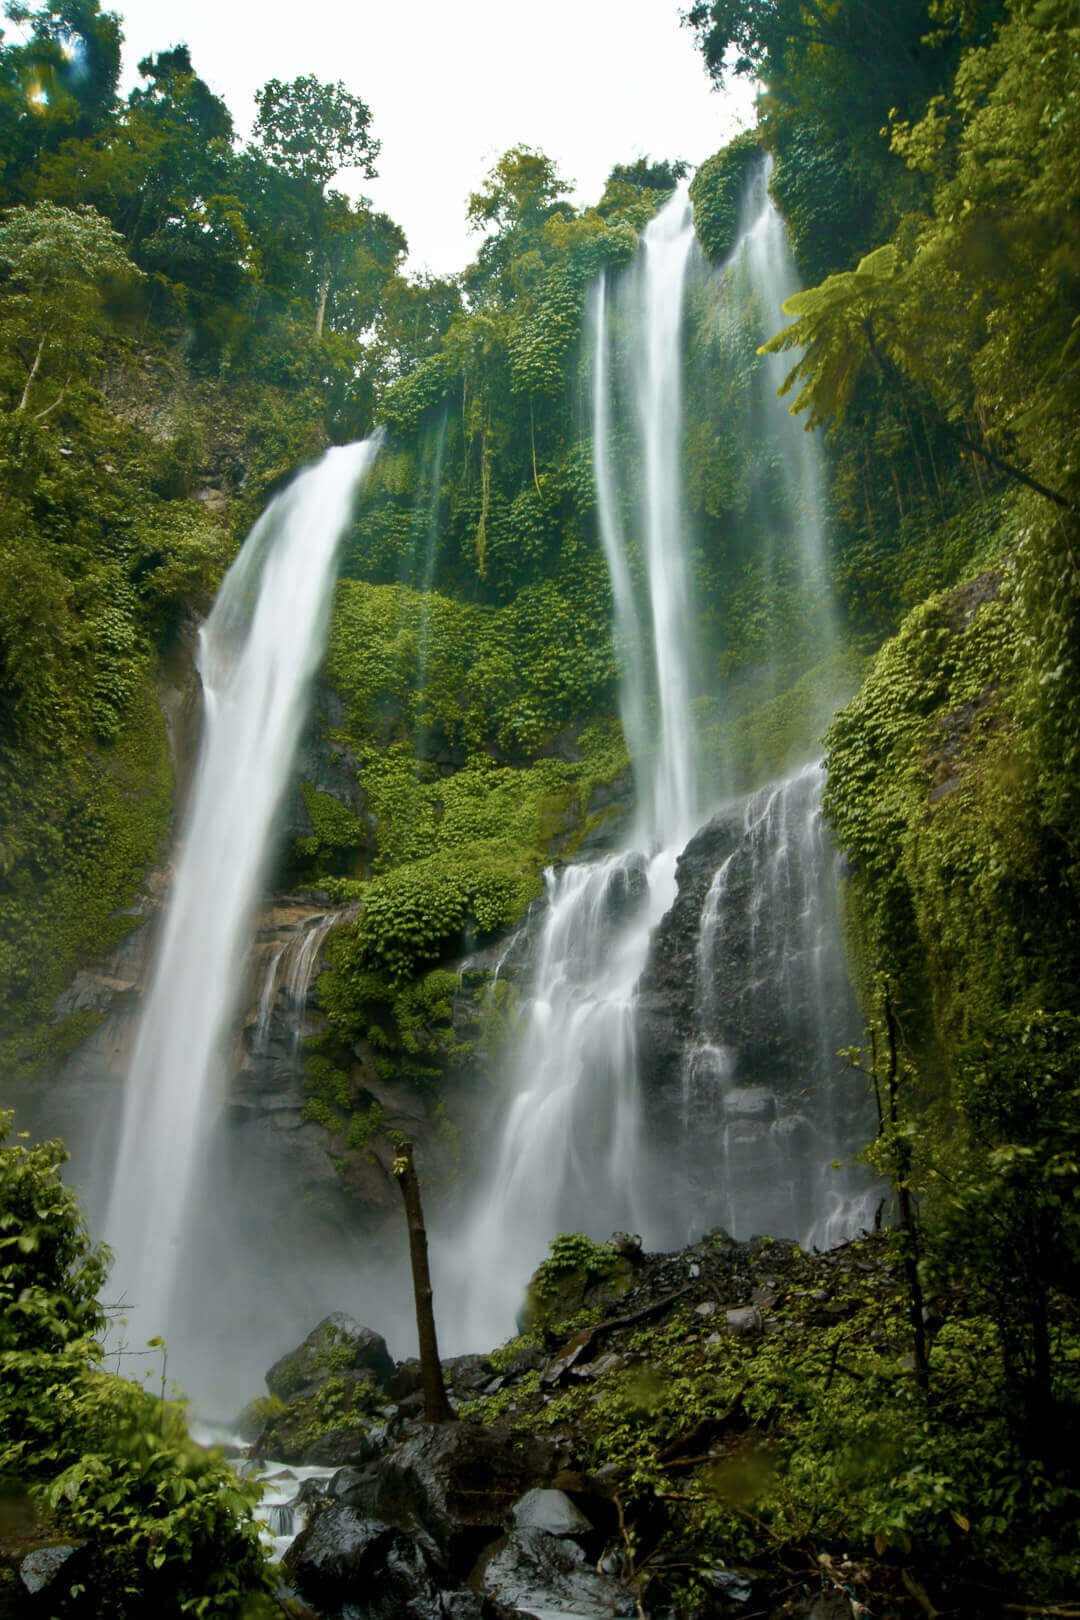 sekumpul-waterfall-03-junot-adiputra.jpg